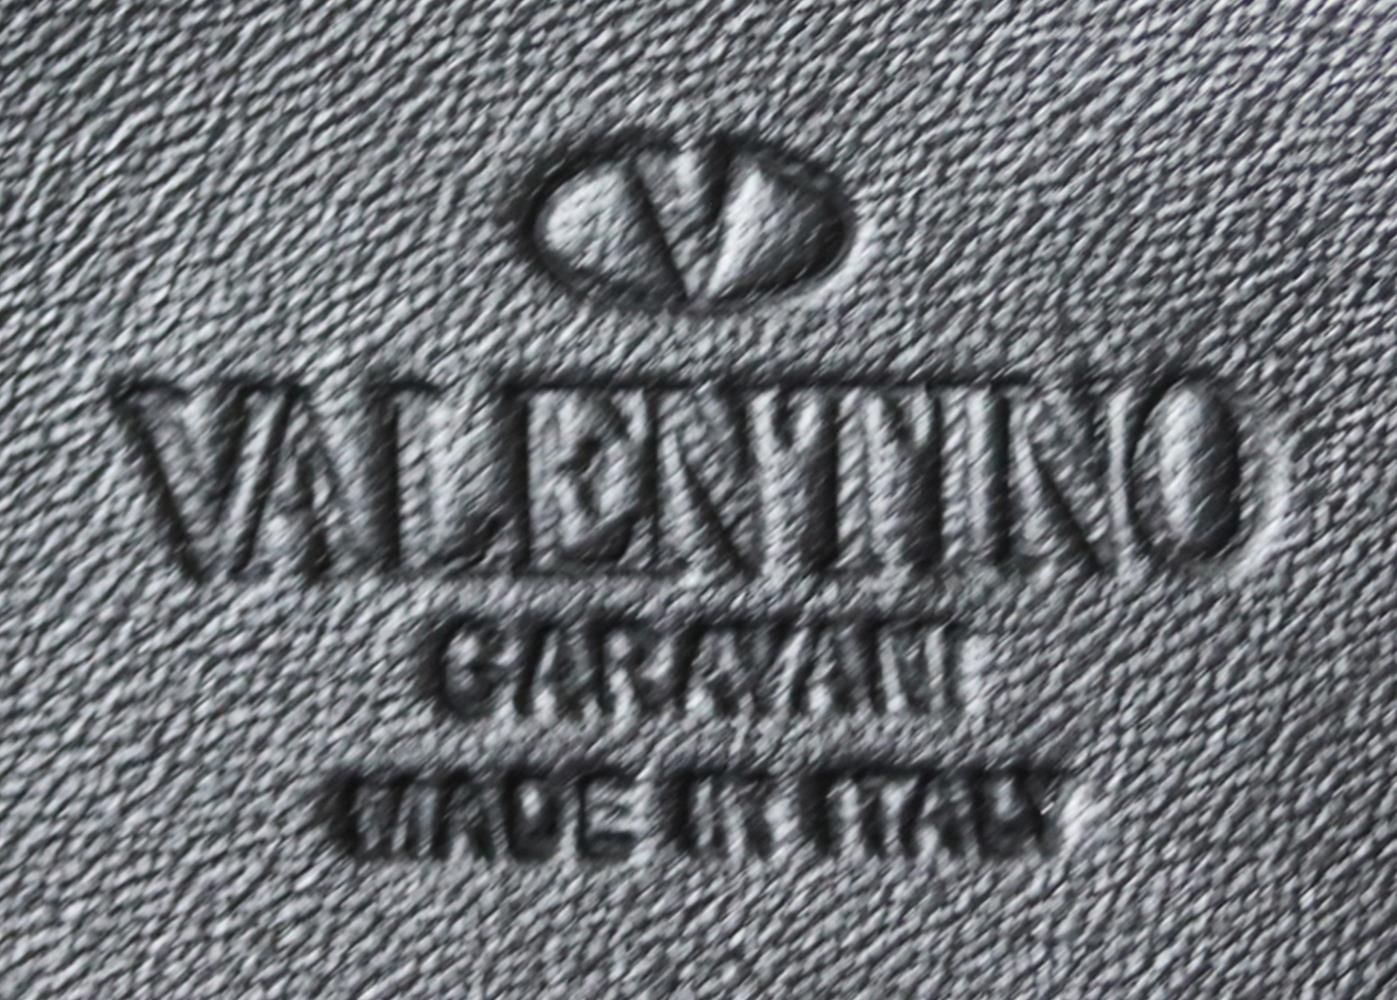 VALENTINO GARAVANI T.B.C. BRAIDED FRINGE SHOULDER BAG